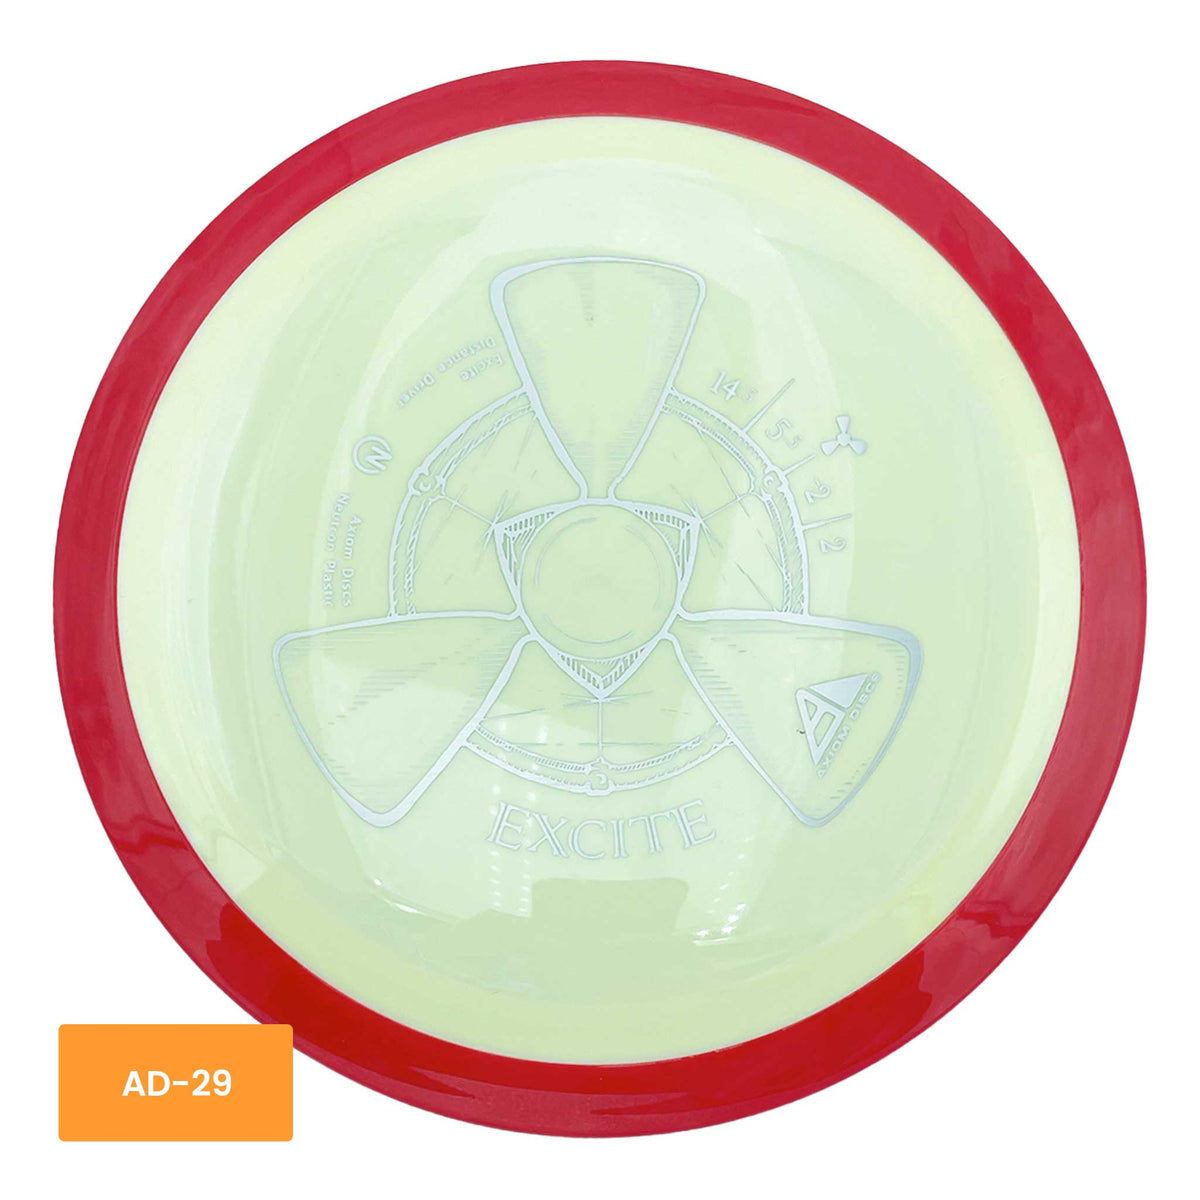 Axiom Discs Neutron Excite distance driver